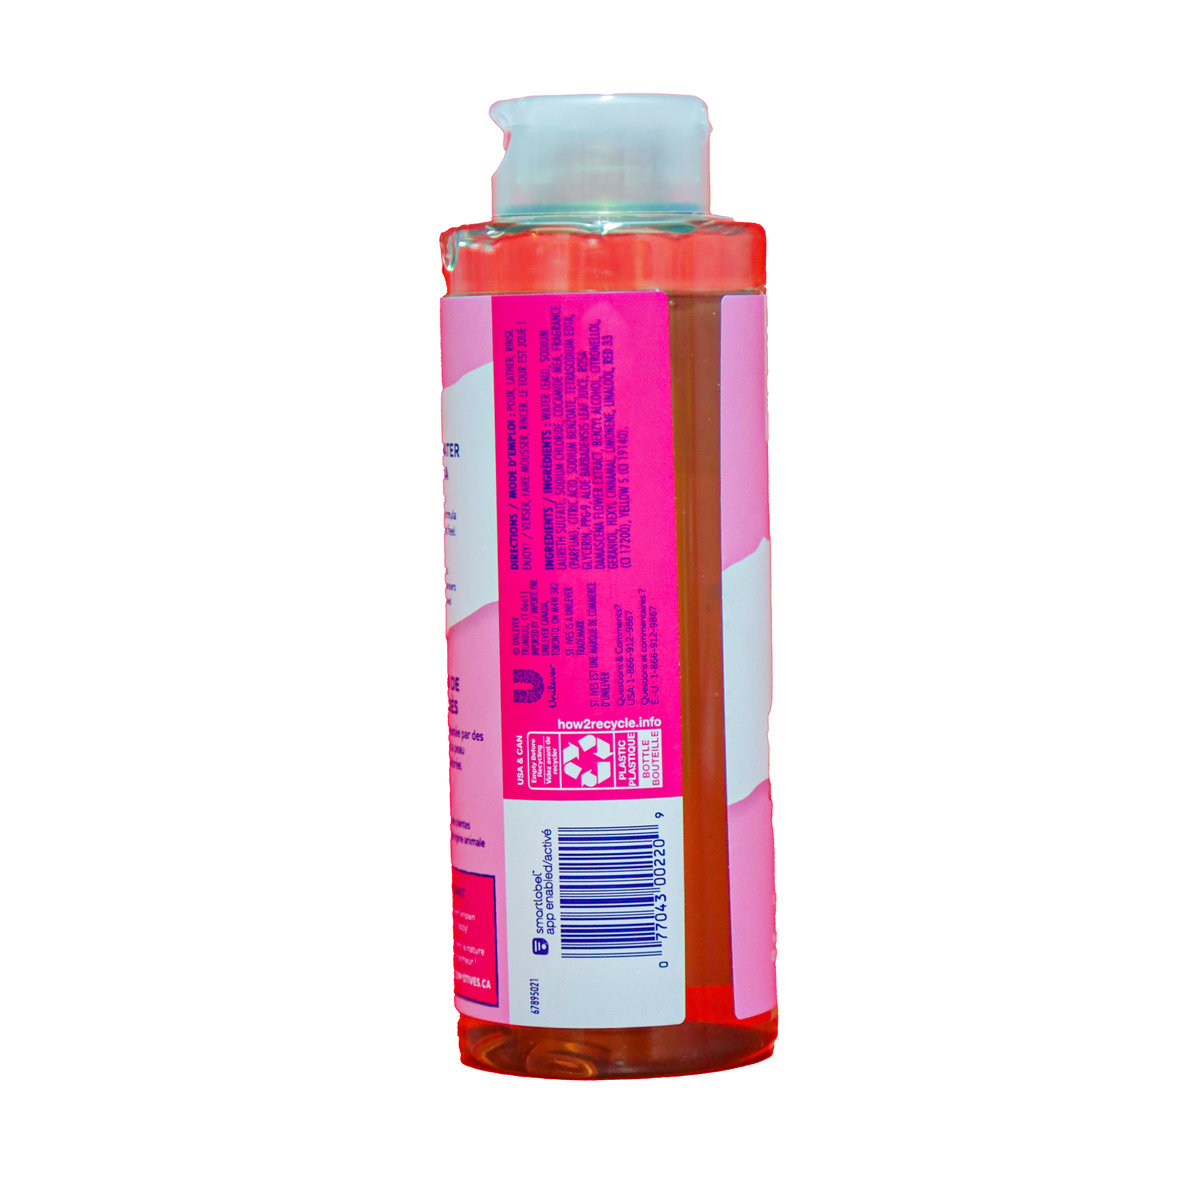 St. Ives Rose Water & Aloe Vera Refreshing Body Wash 473 ml